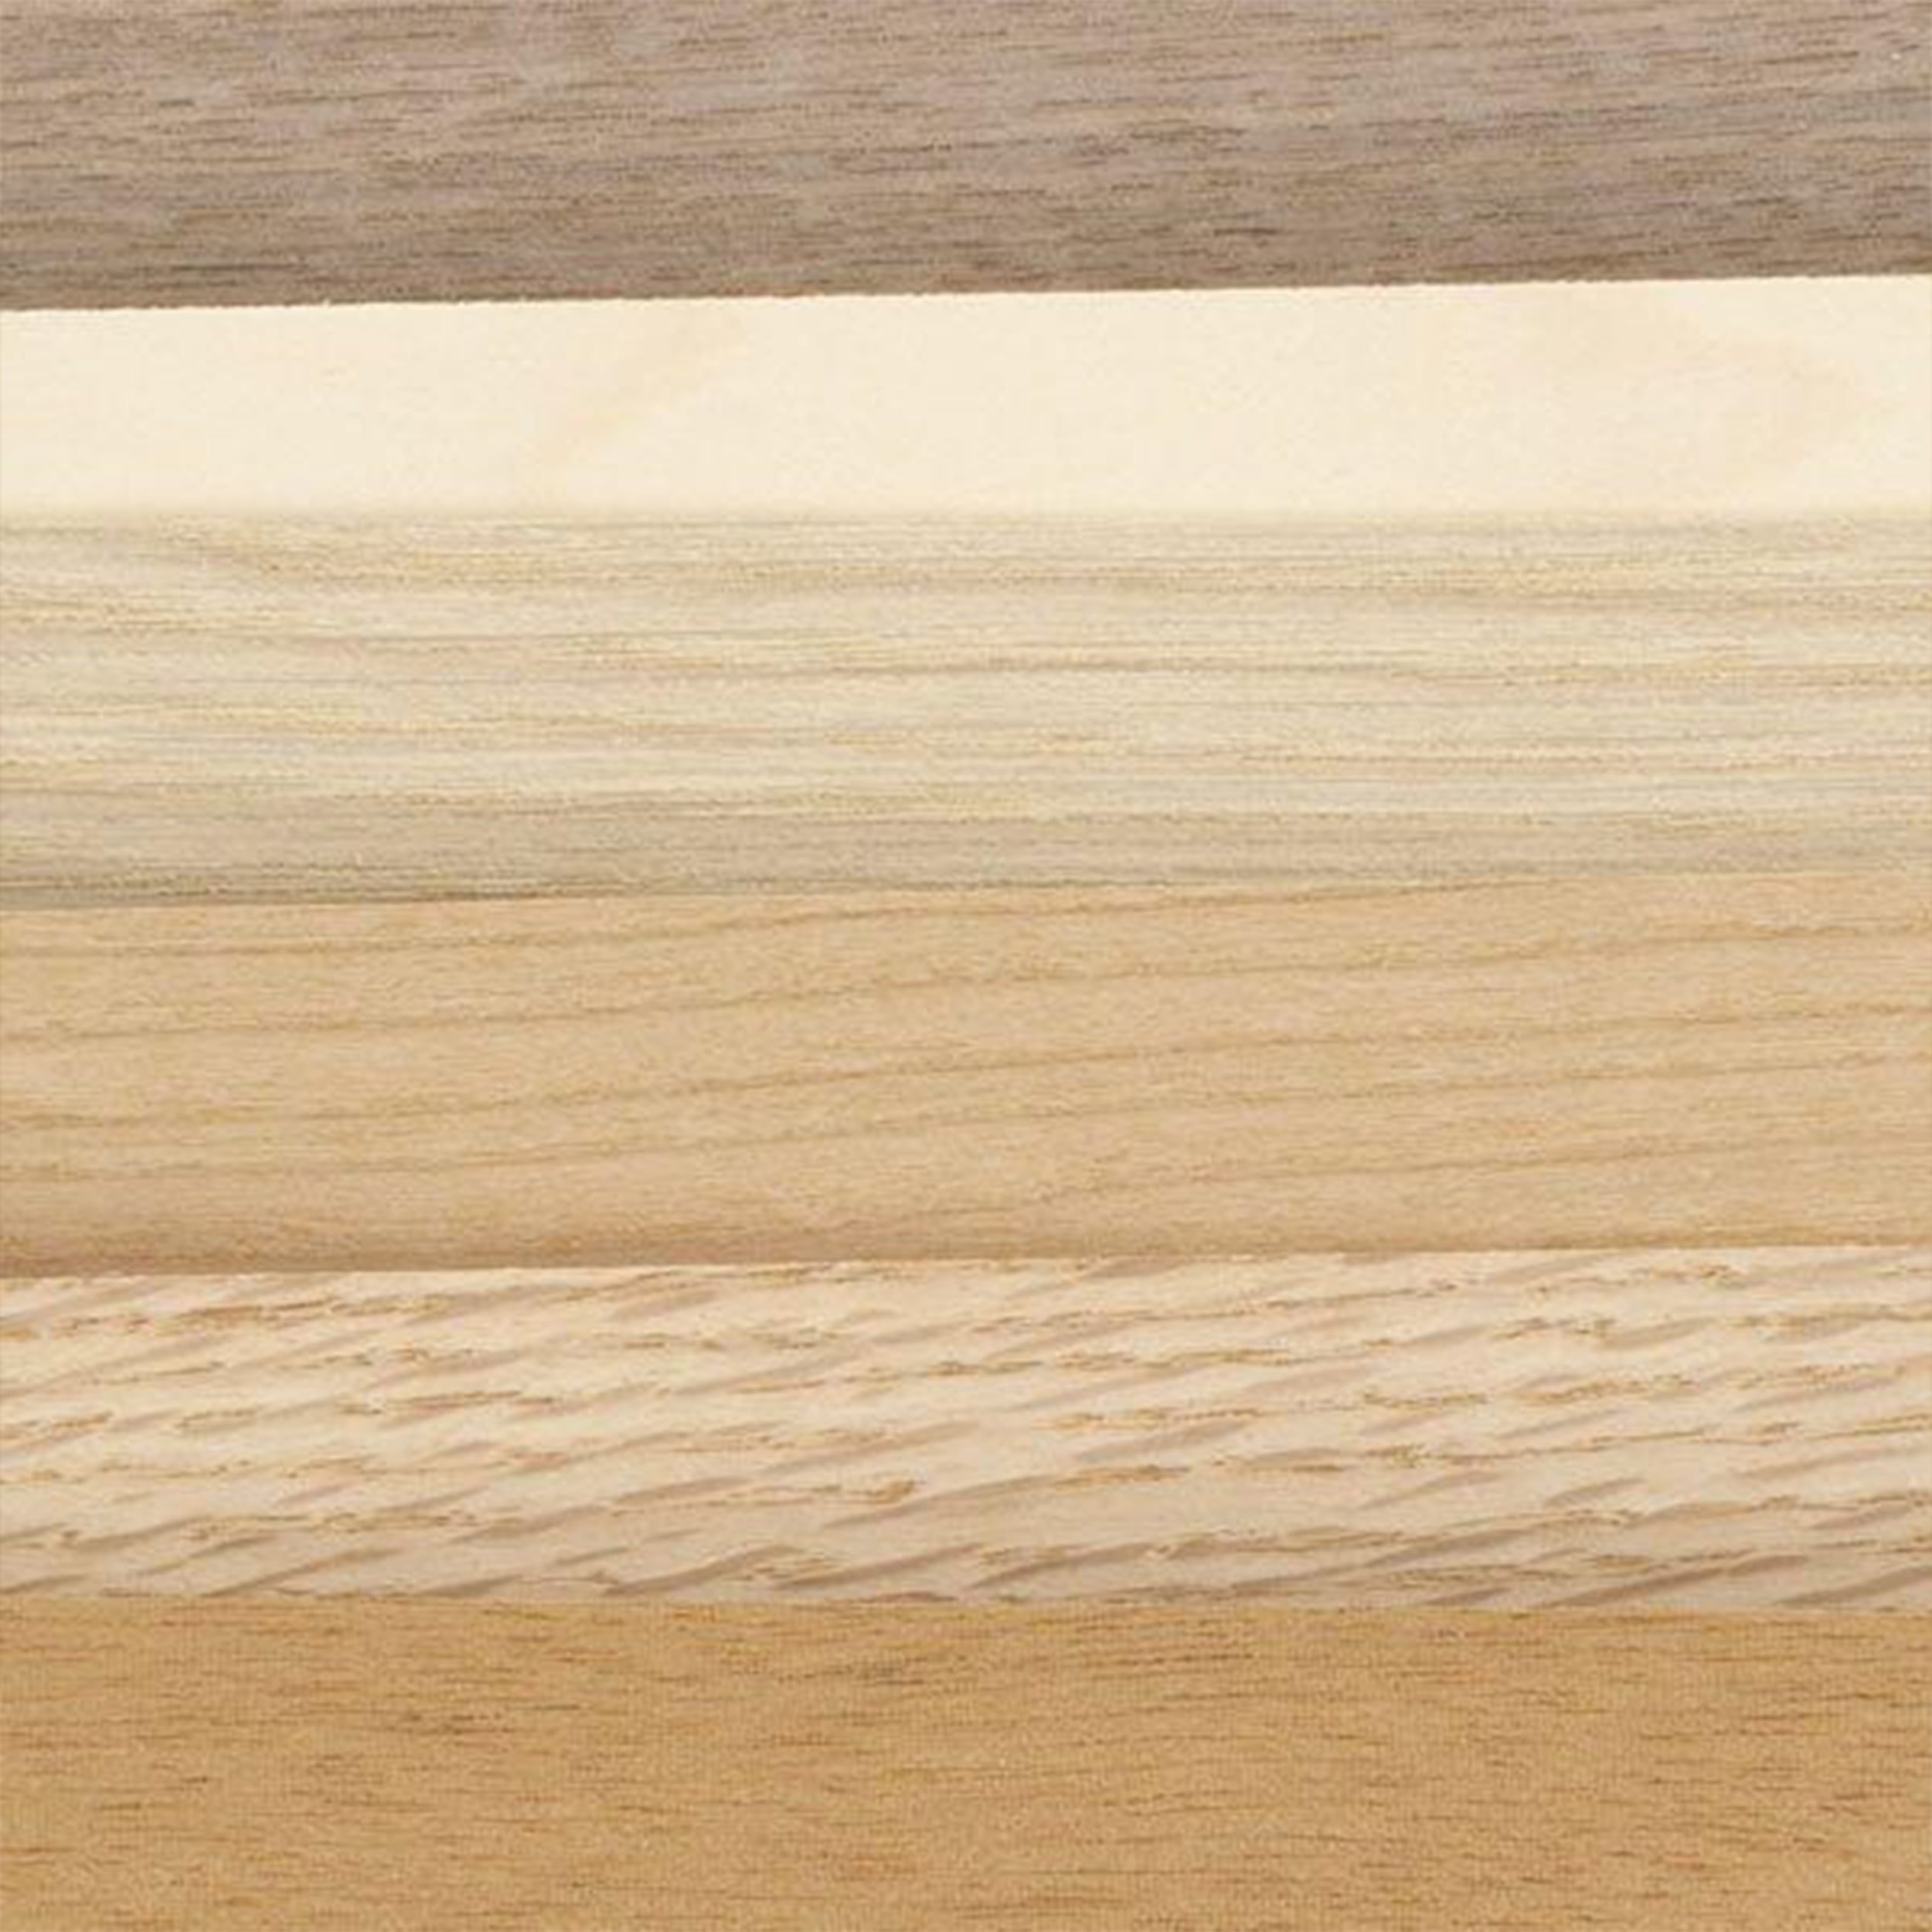 Variety Pack Wood Veneer ~4 sq ft Pack of 7-9" x 9" Sheets Raw/Unbacked 